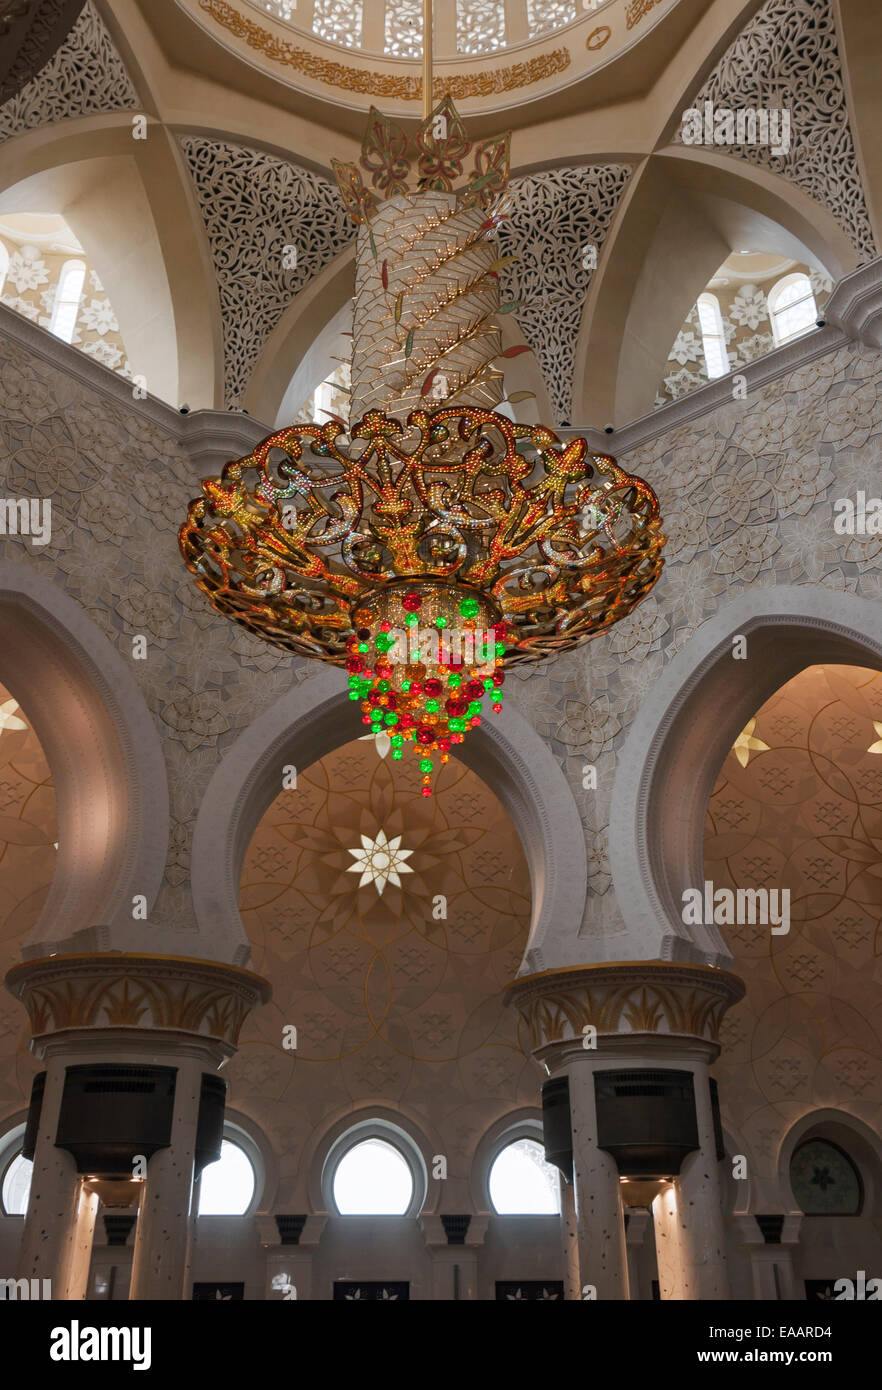 Sheikh Zayed Grand Mosque, Abu Dhabi, United Arab Emirates. Interior of the Main Prayer Hall. Stock Photo